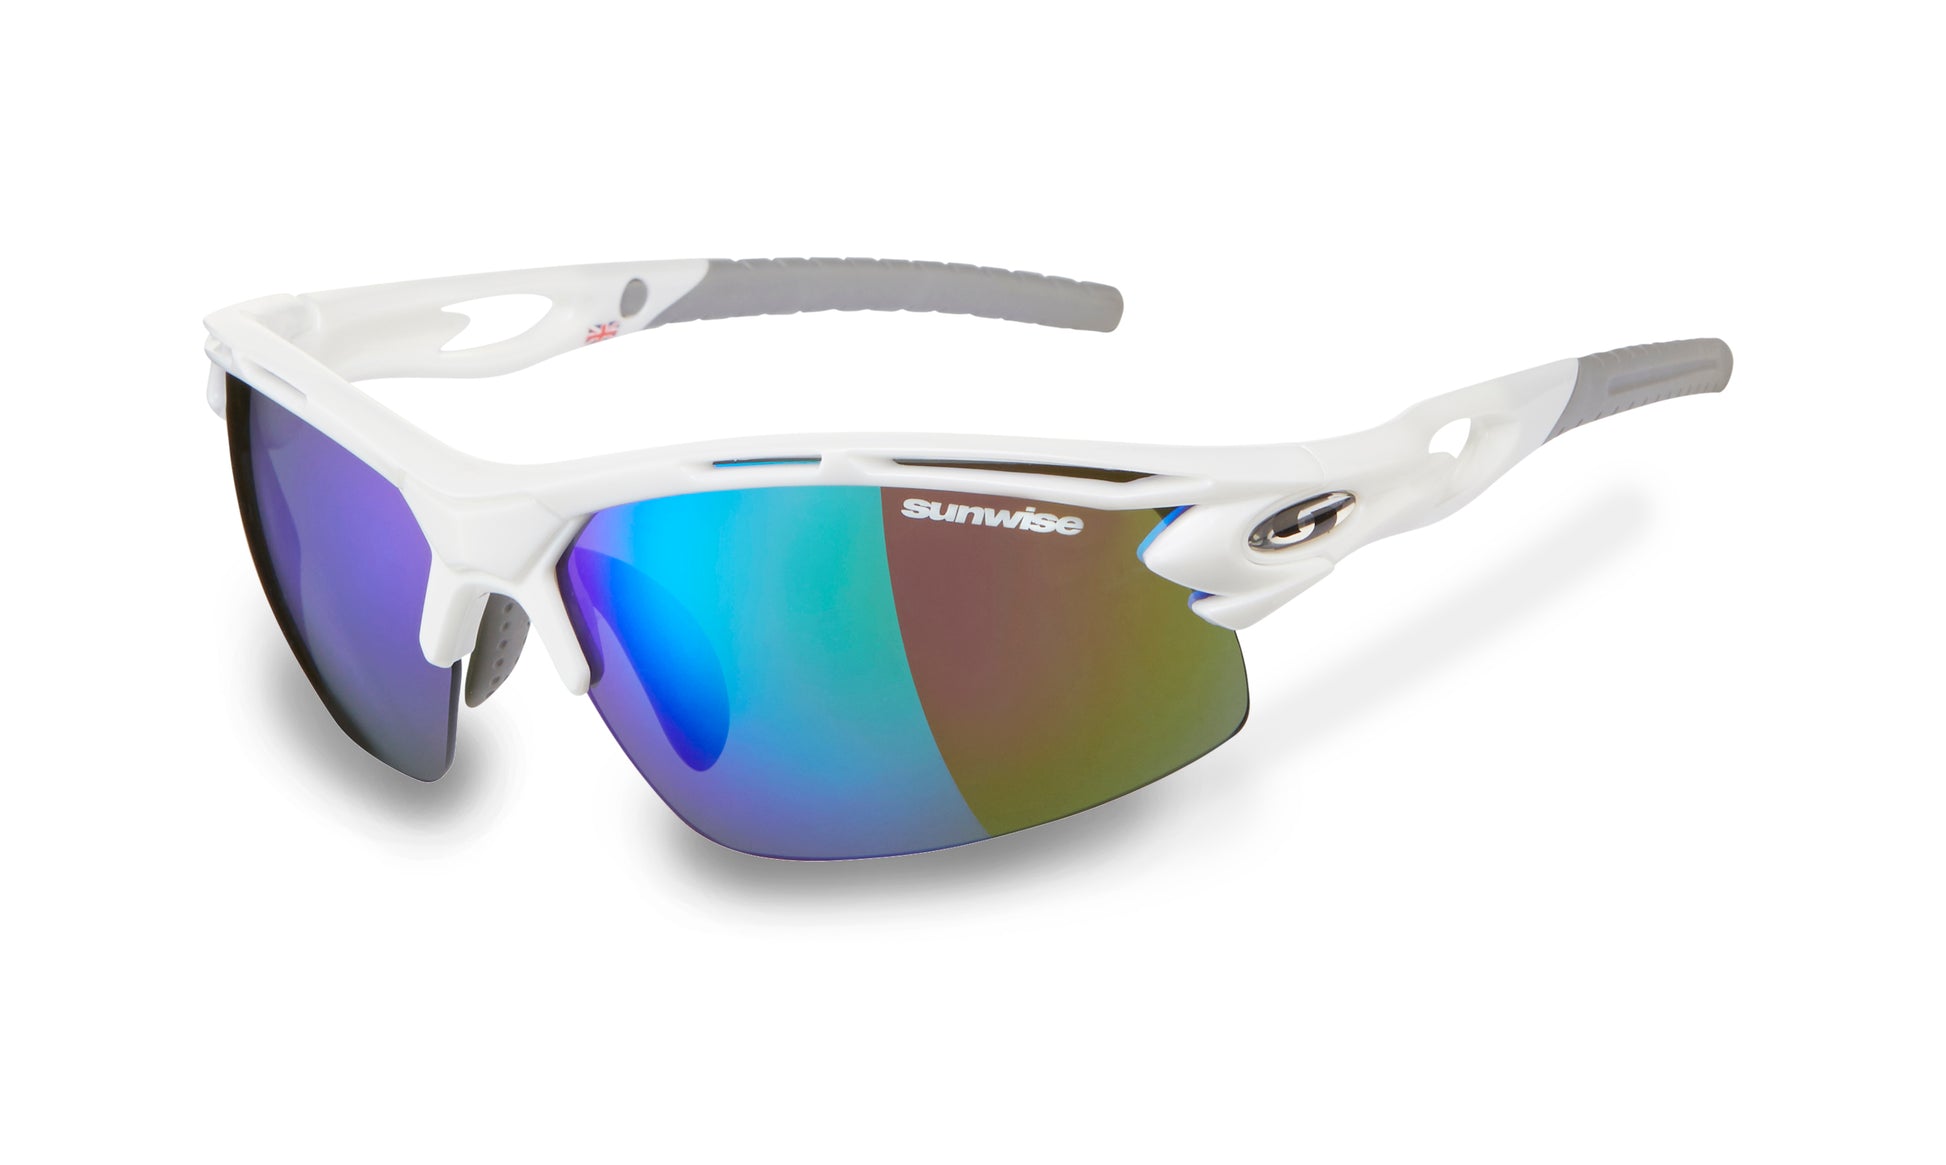 Sunwise vertex sports sunglasses in white